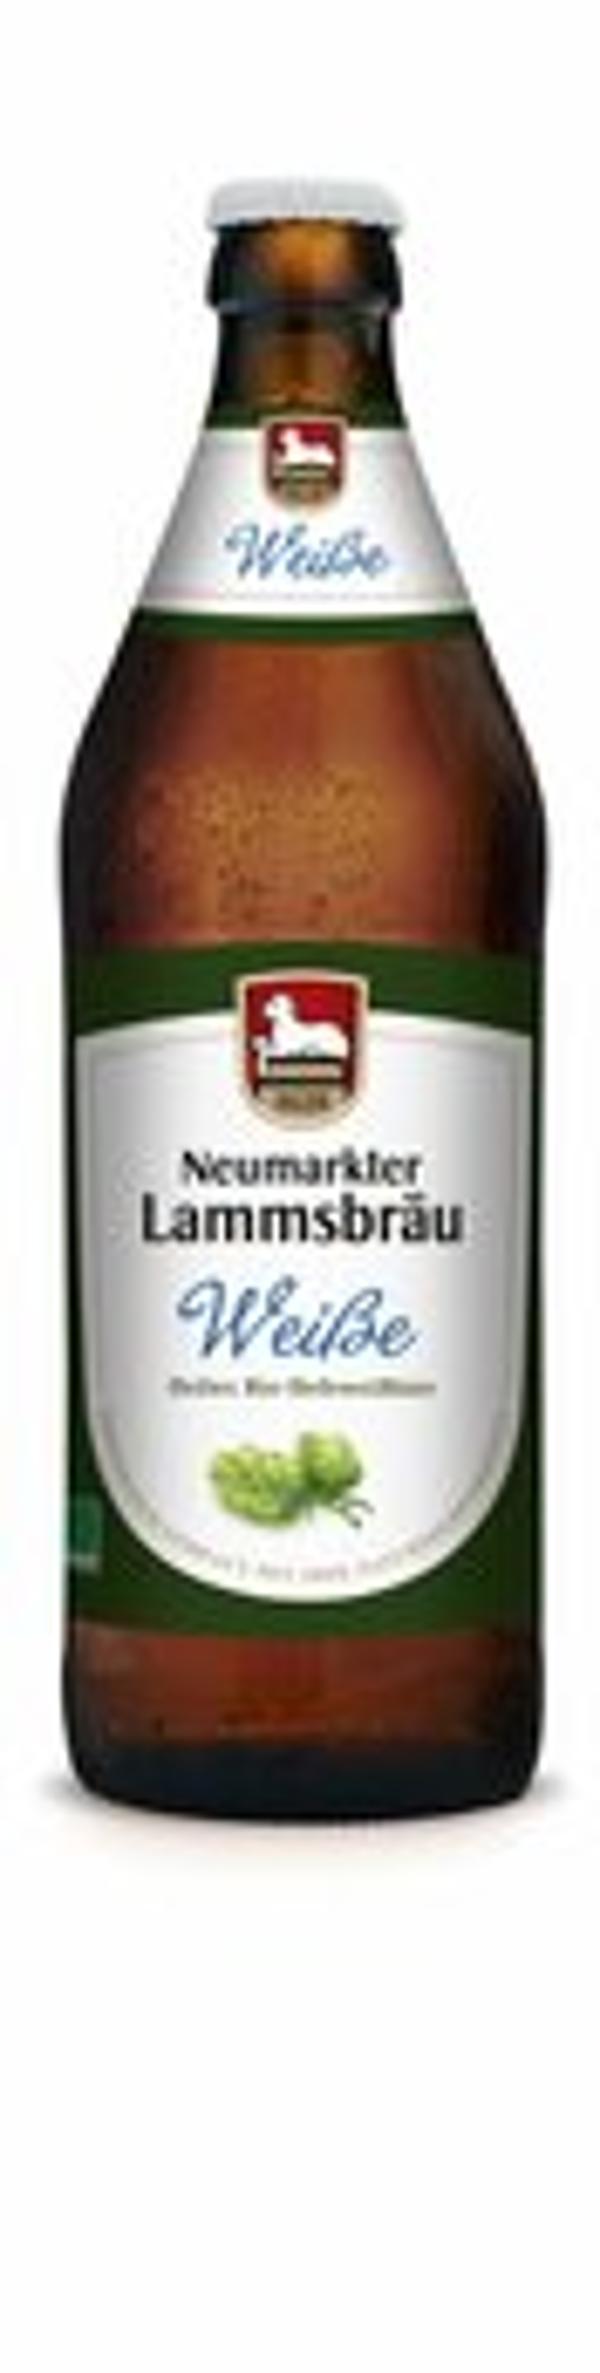 Produktfoto zu Lammsbräu Weiße, Hefeweizen hell, naturtrüb 0,5l